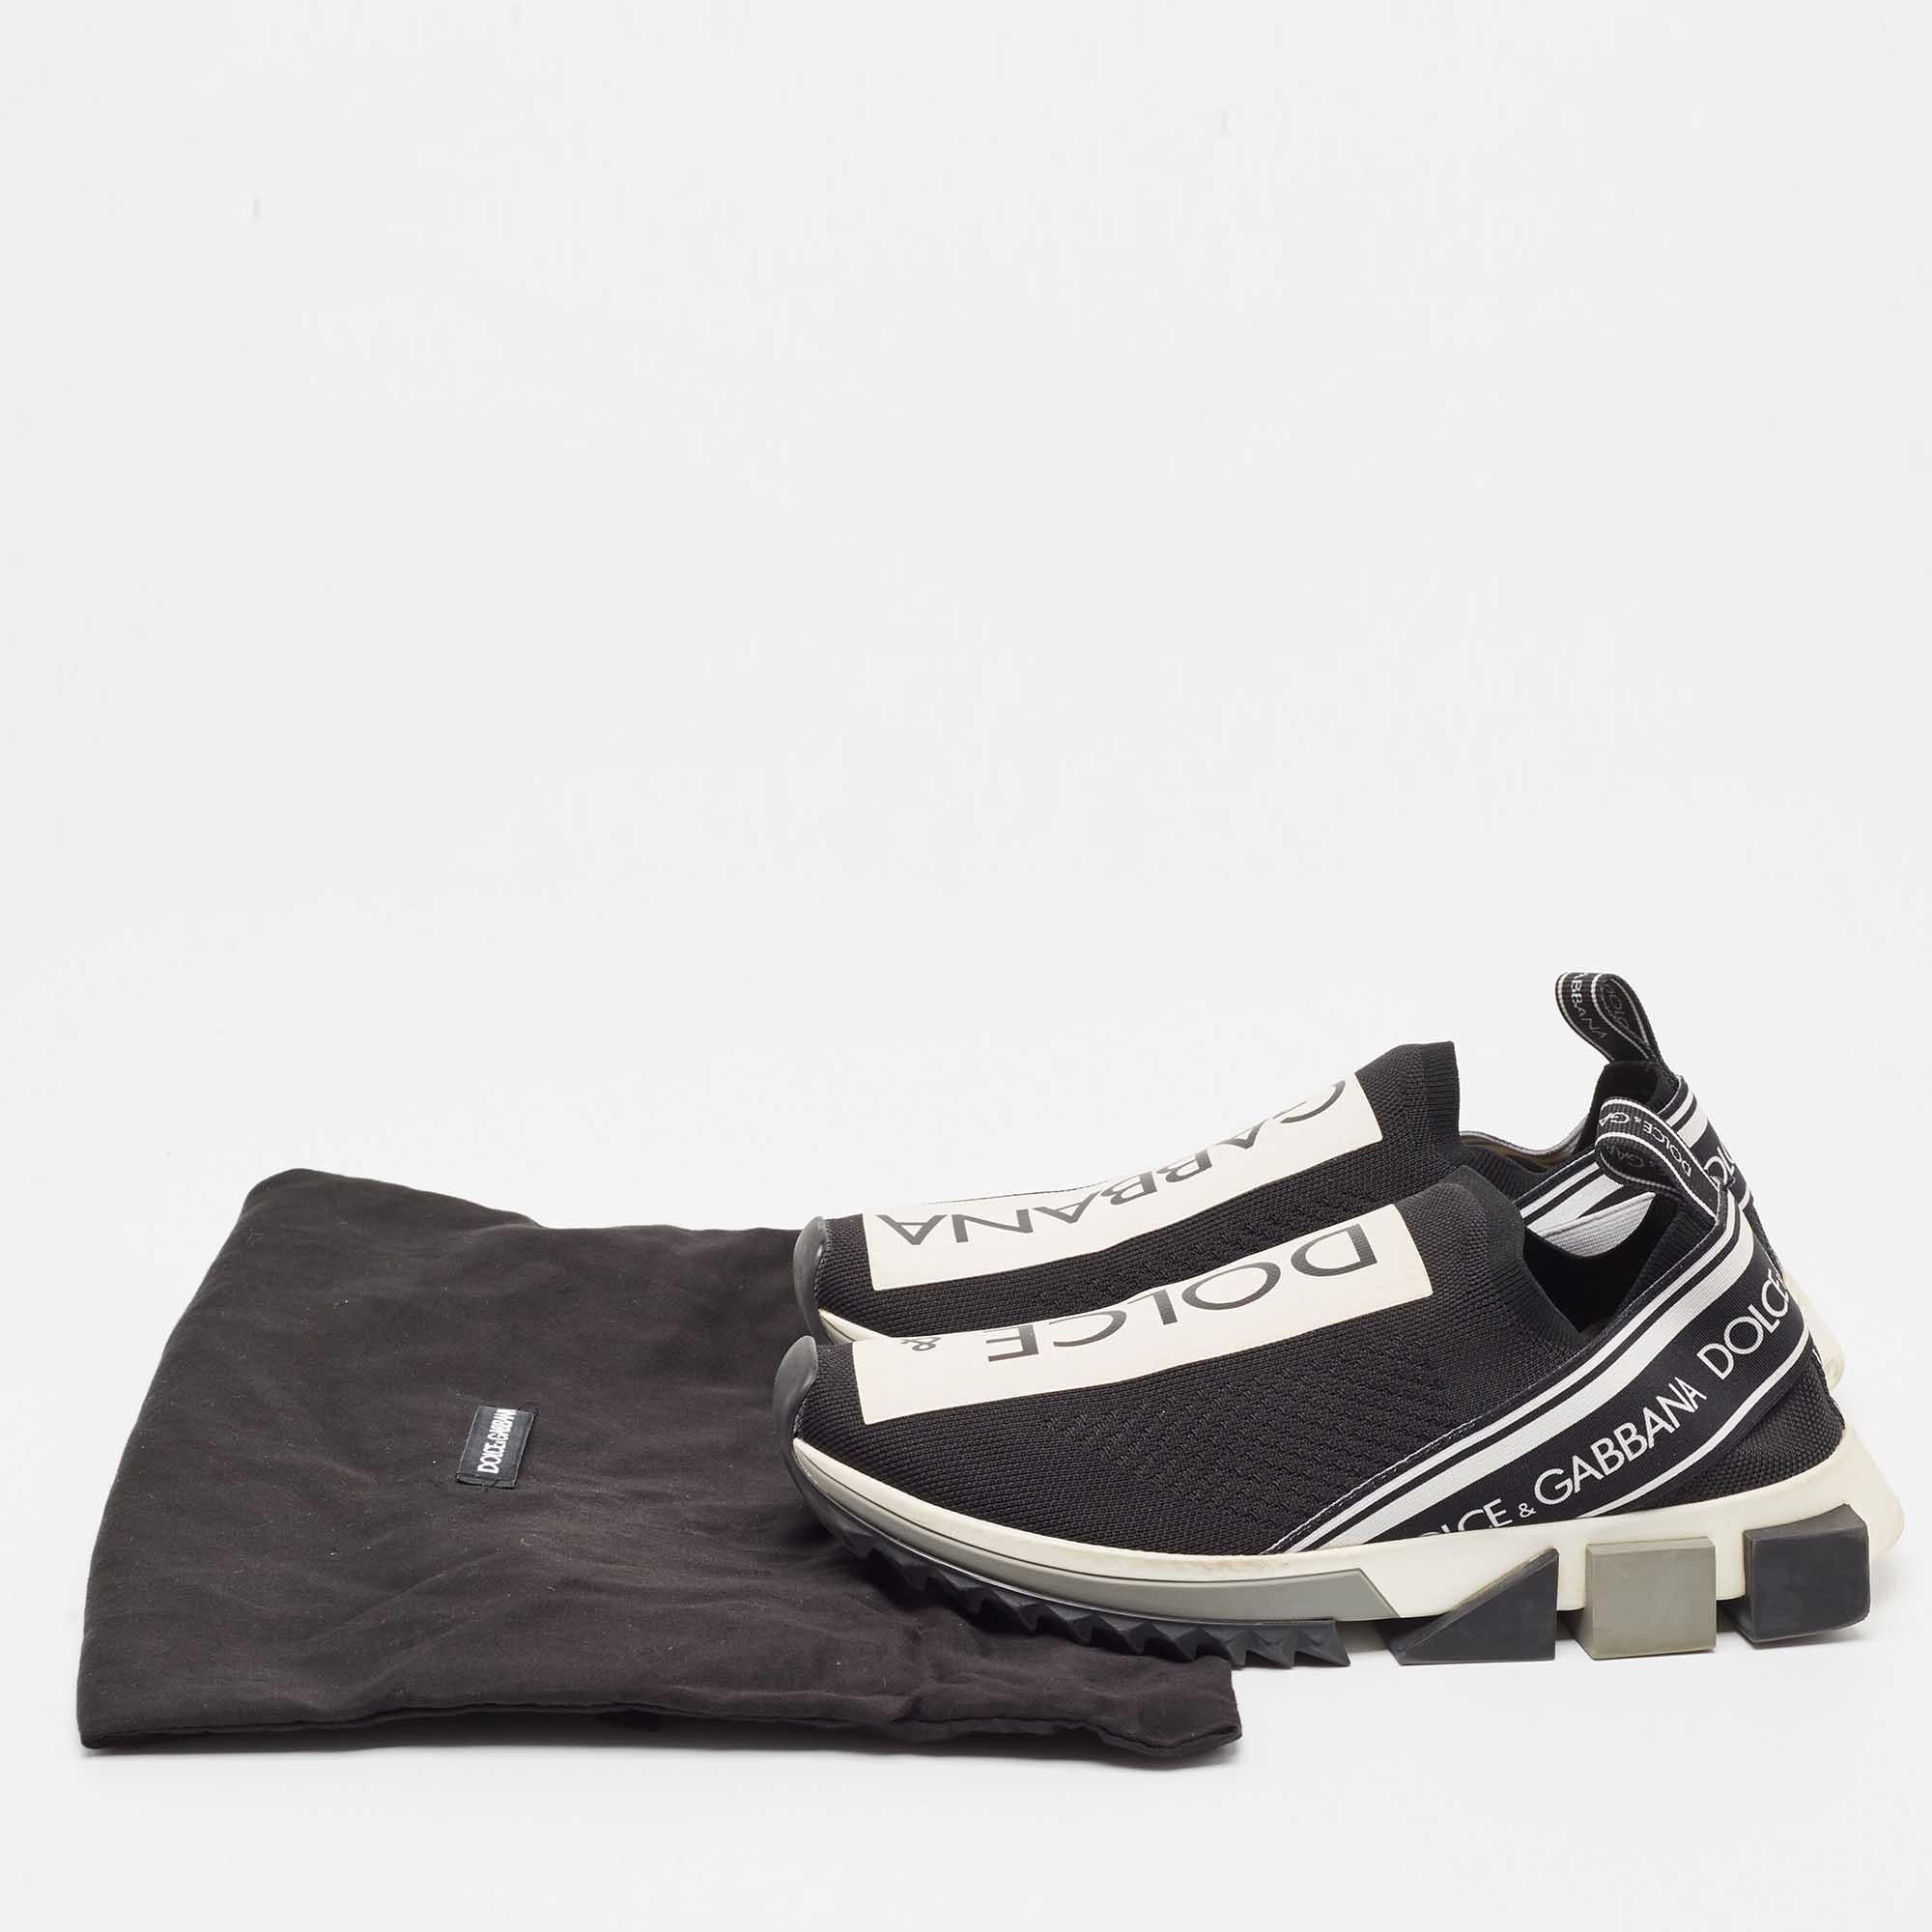 Dolce & Gabbana Black Knit Fabric Sorrento Sneakers Size 39 5